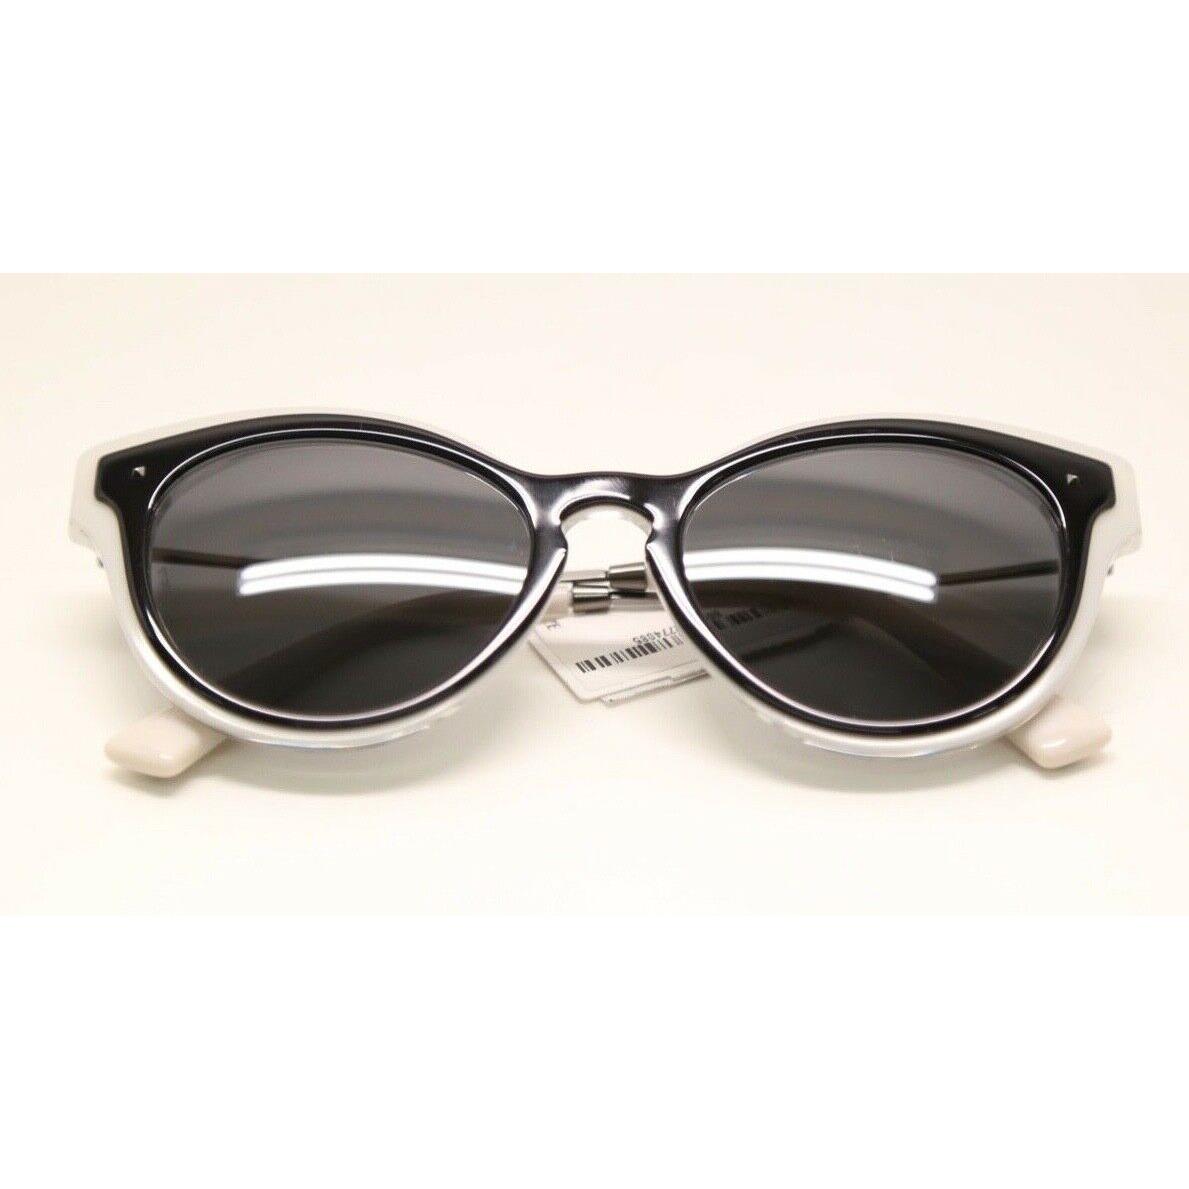 Valentino sunglasses  - Black Frame, Gray Lens 5